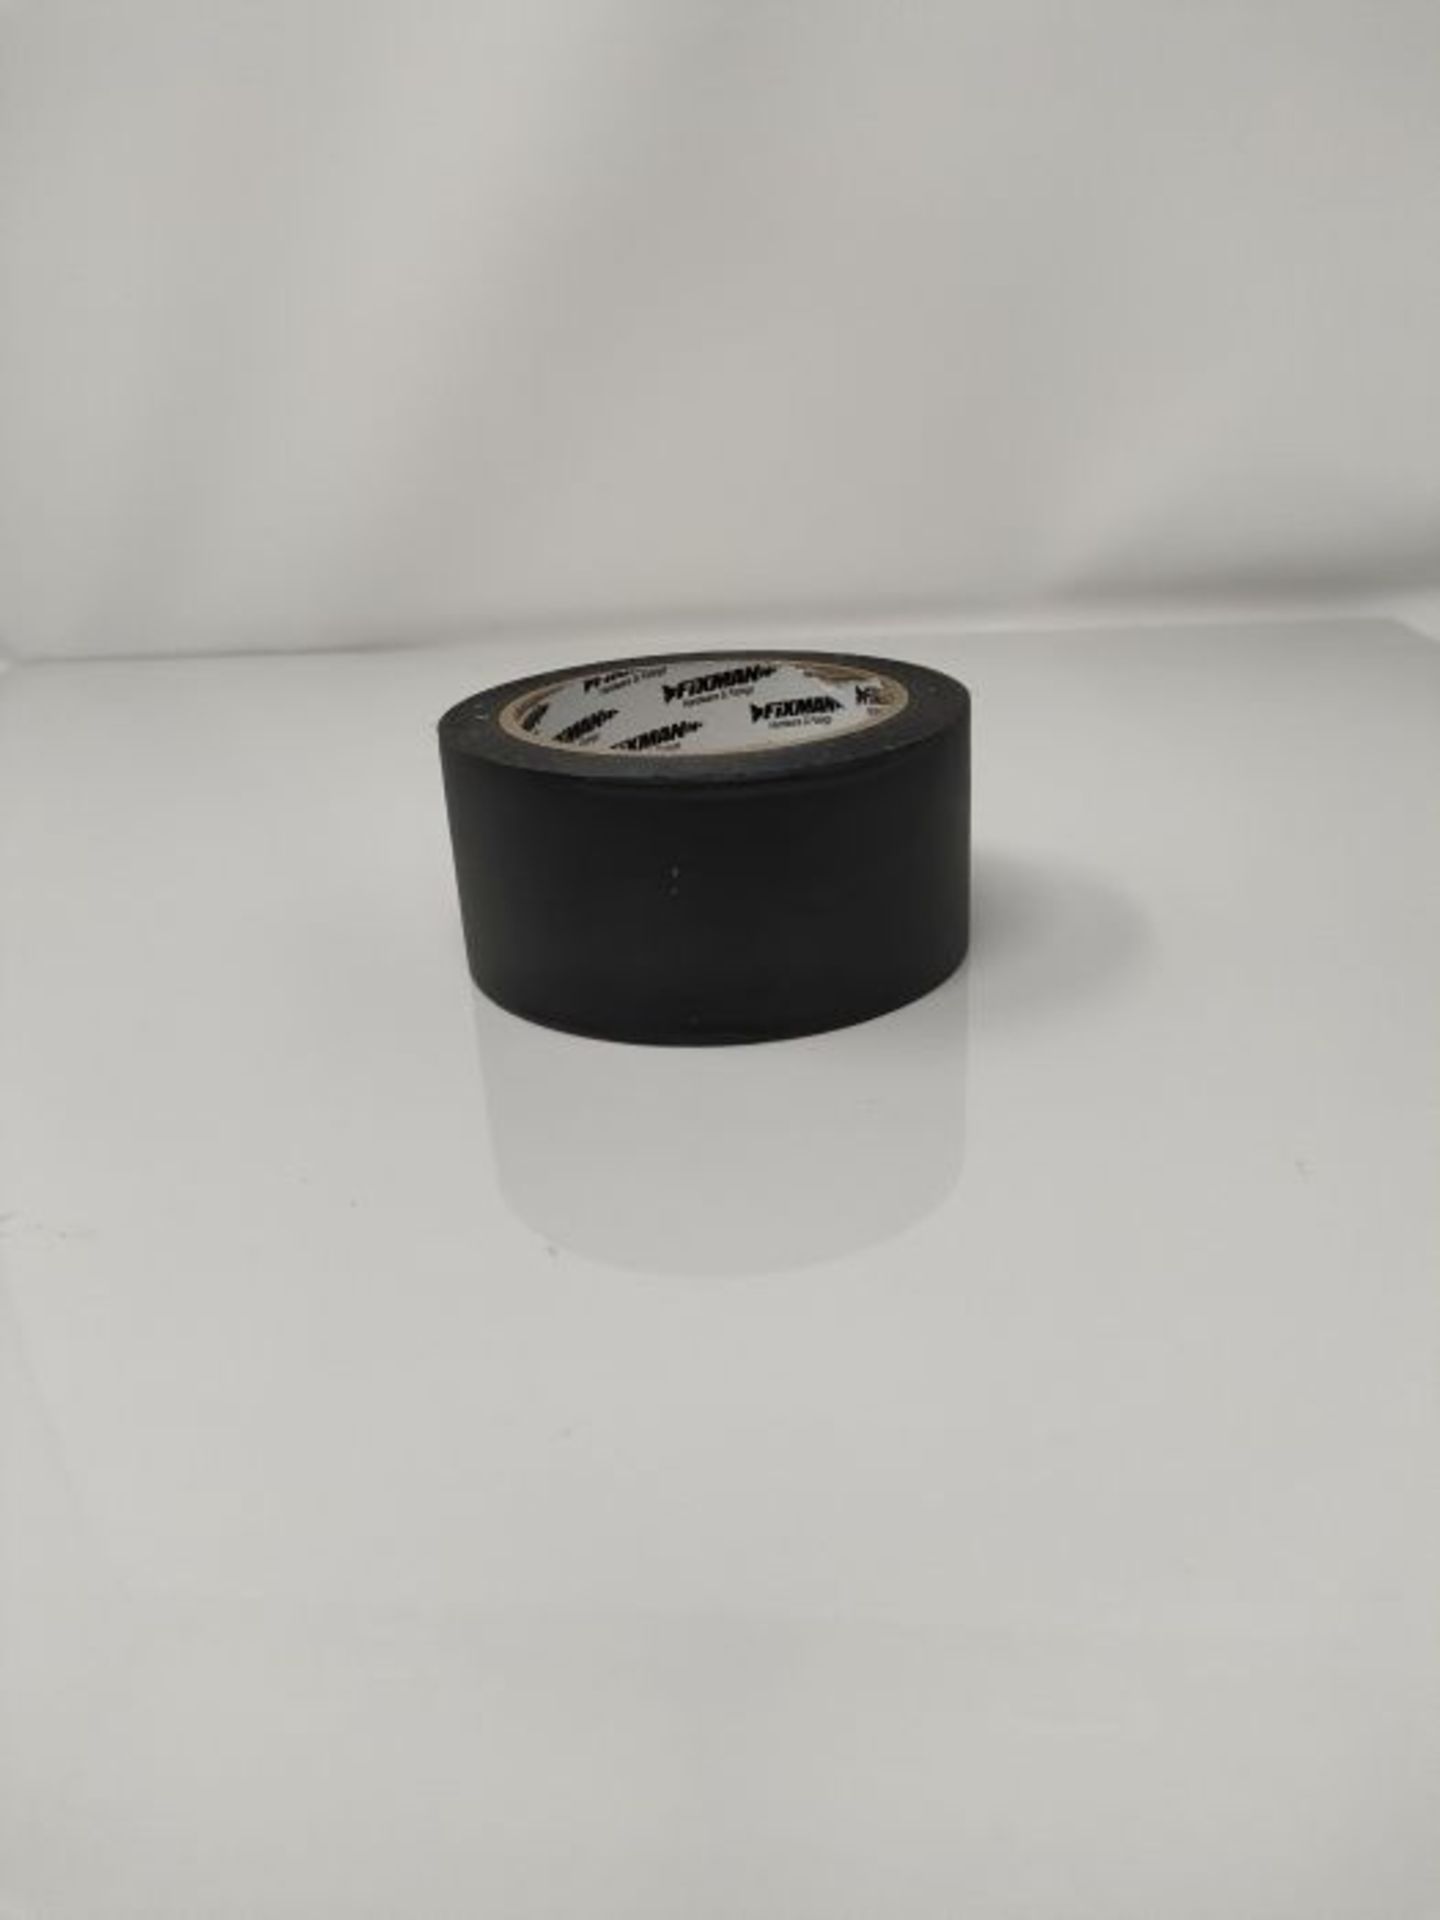 Fixman 190160 Super Heavy Duty Black Duct Tape 50mm x 50m - Image 3 of 3